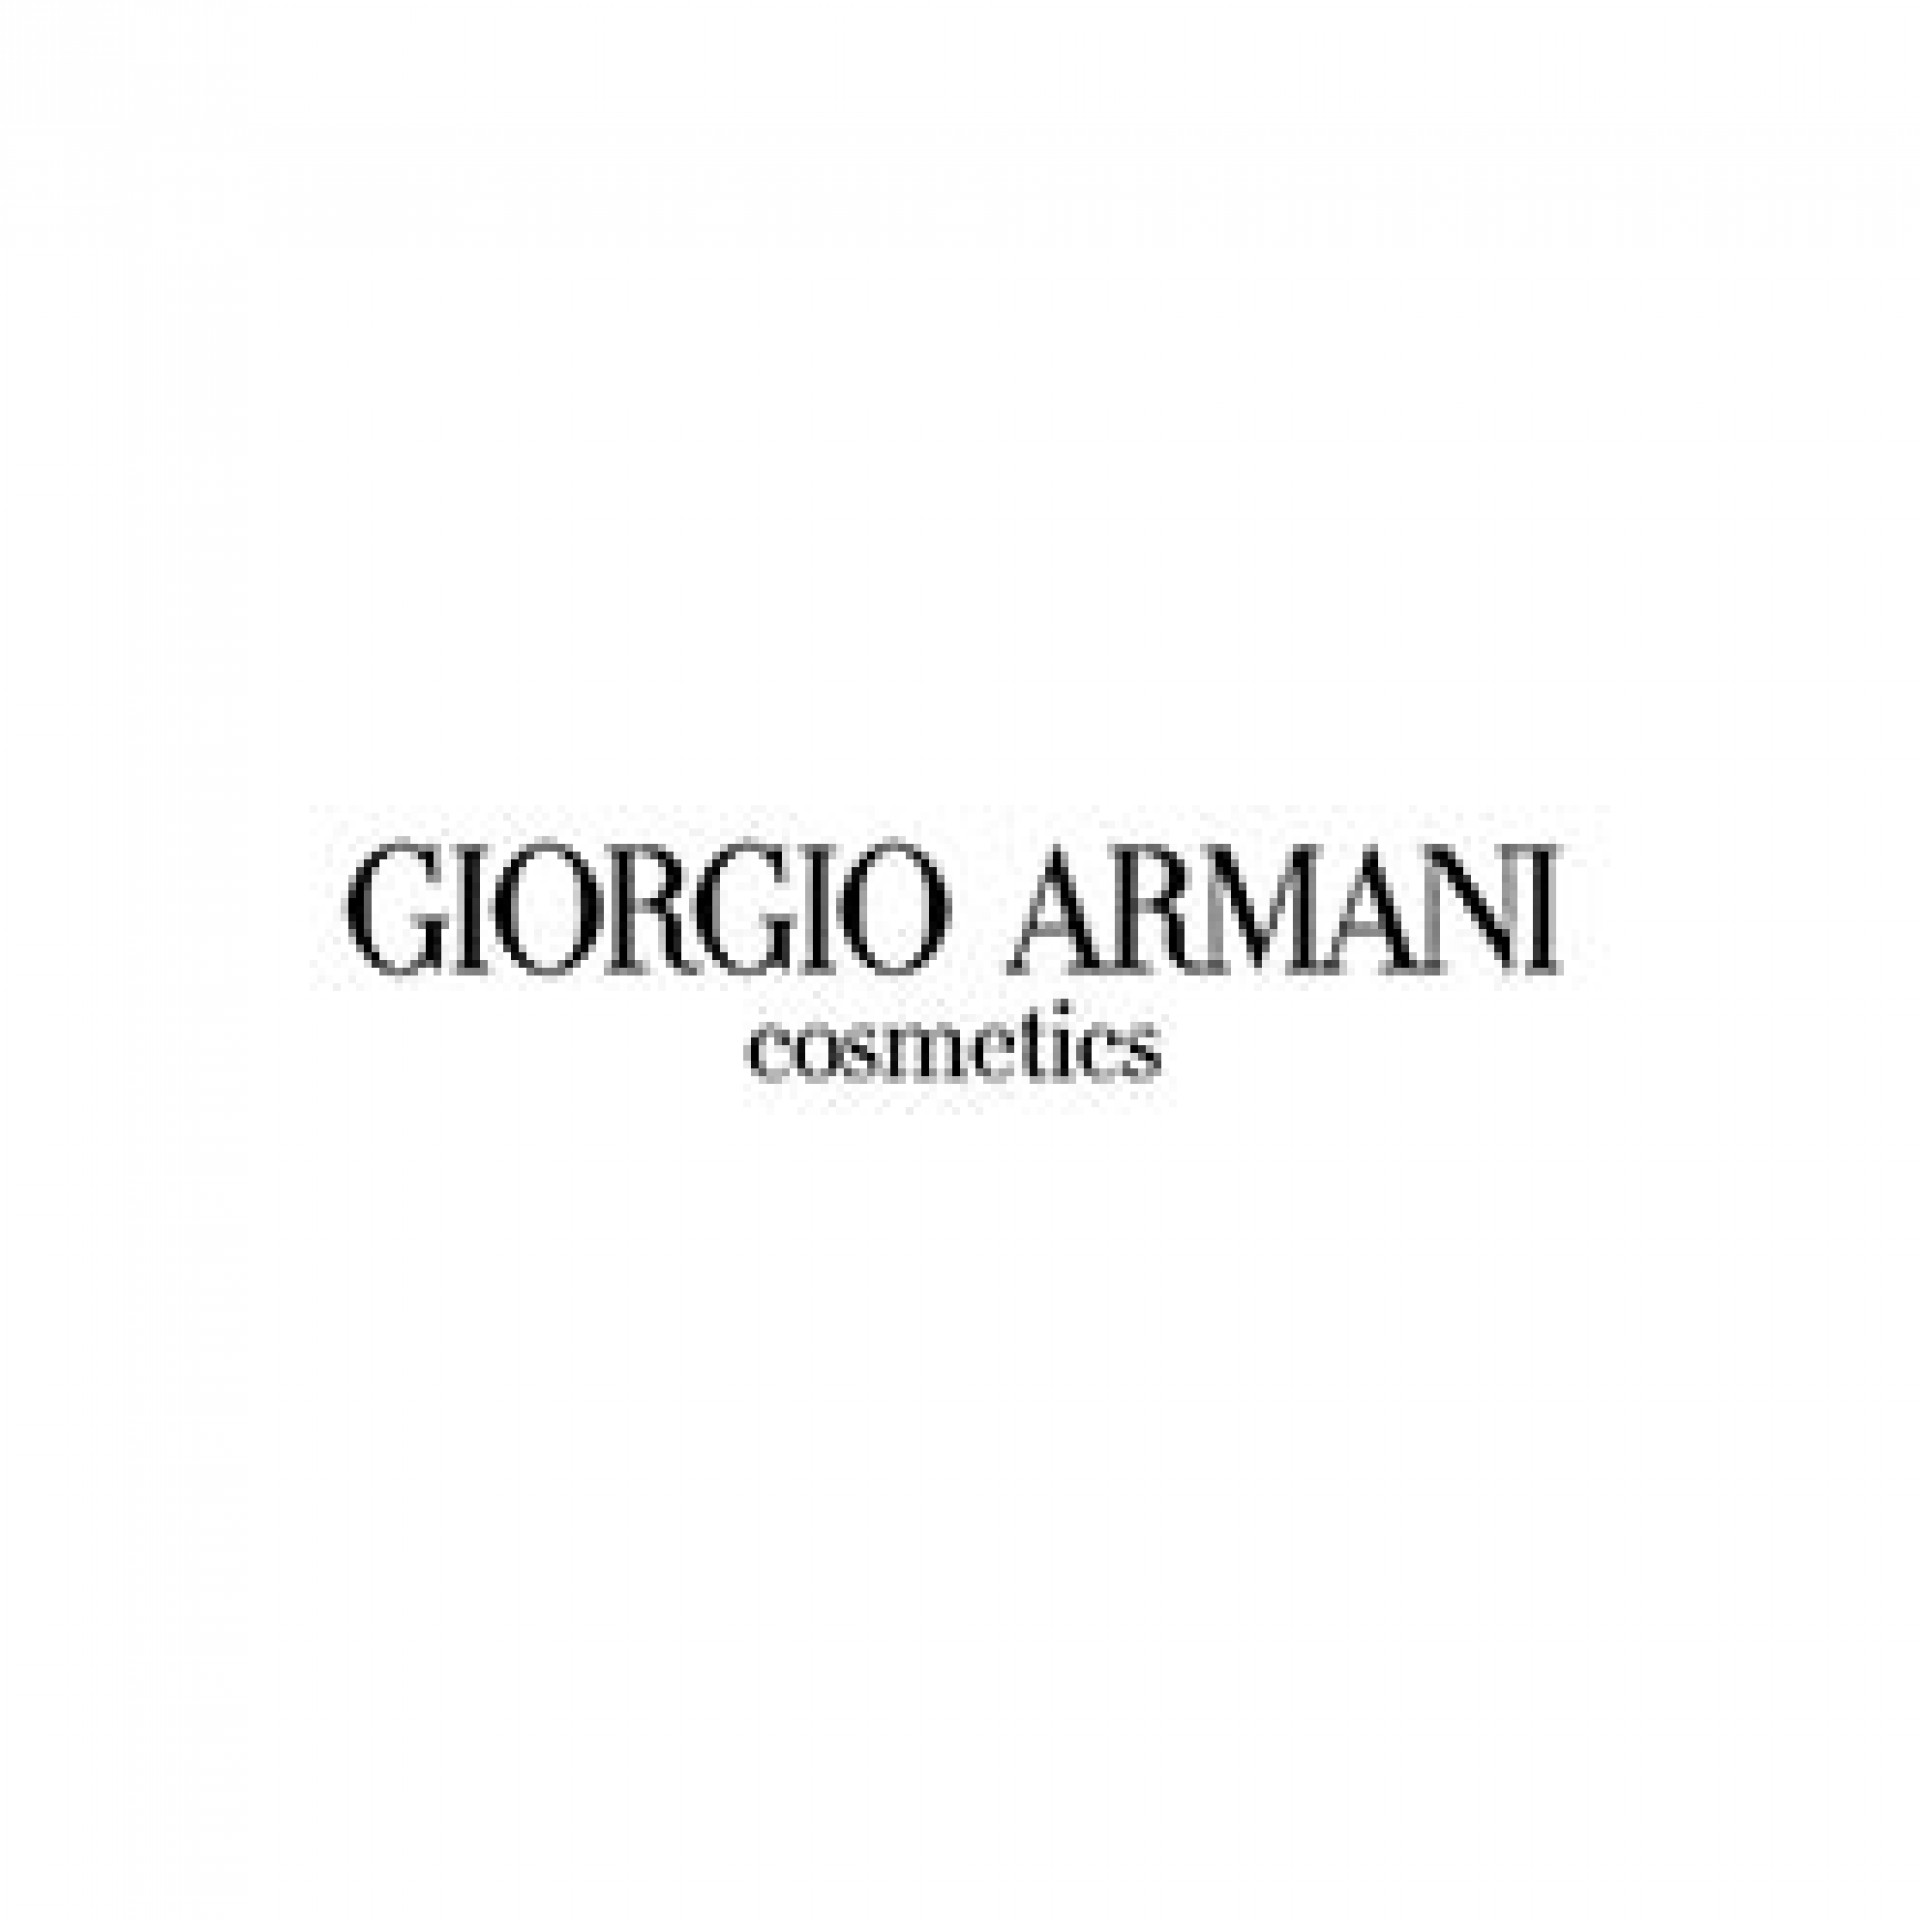 armani-cosmetics.jpg